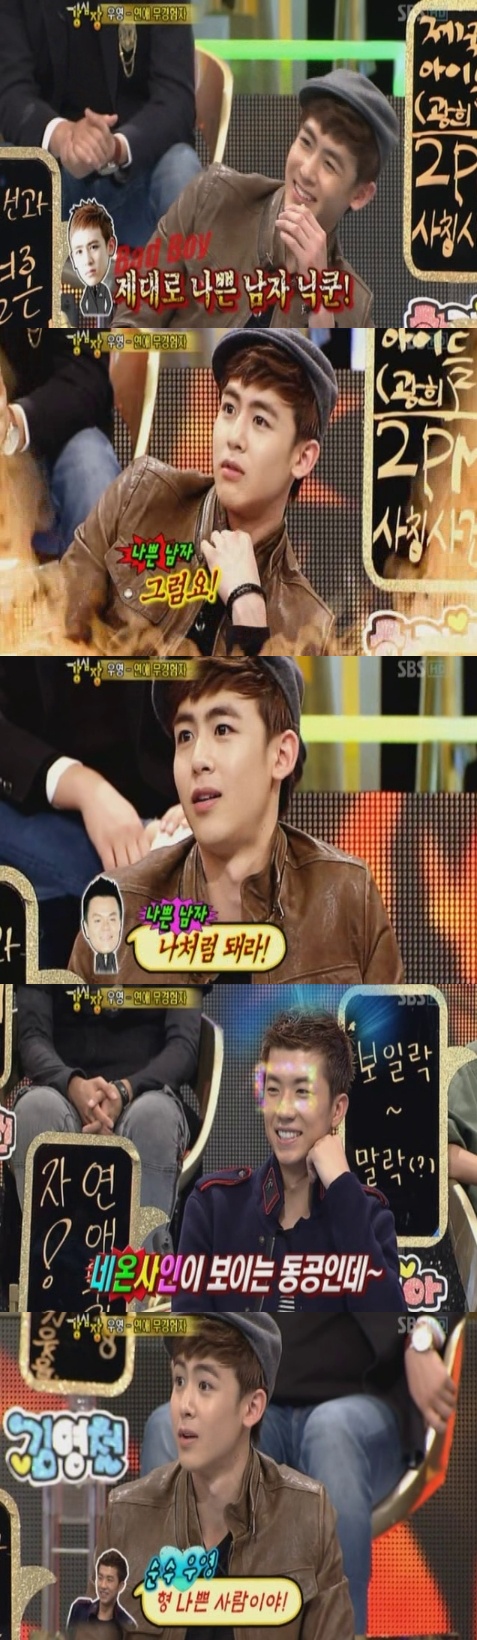 2PM 우영 "닉쿤은 나쁜 남자..자꾸 놀라고 부추긴다"